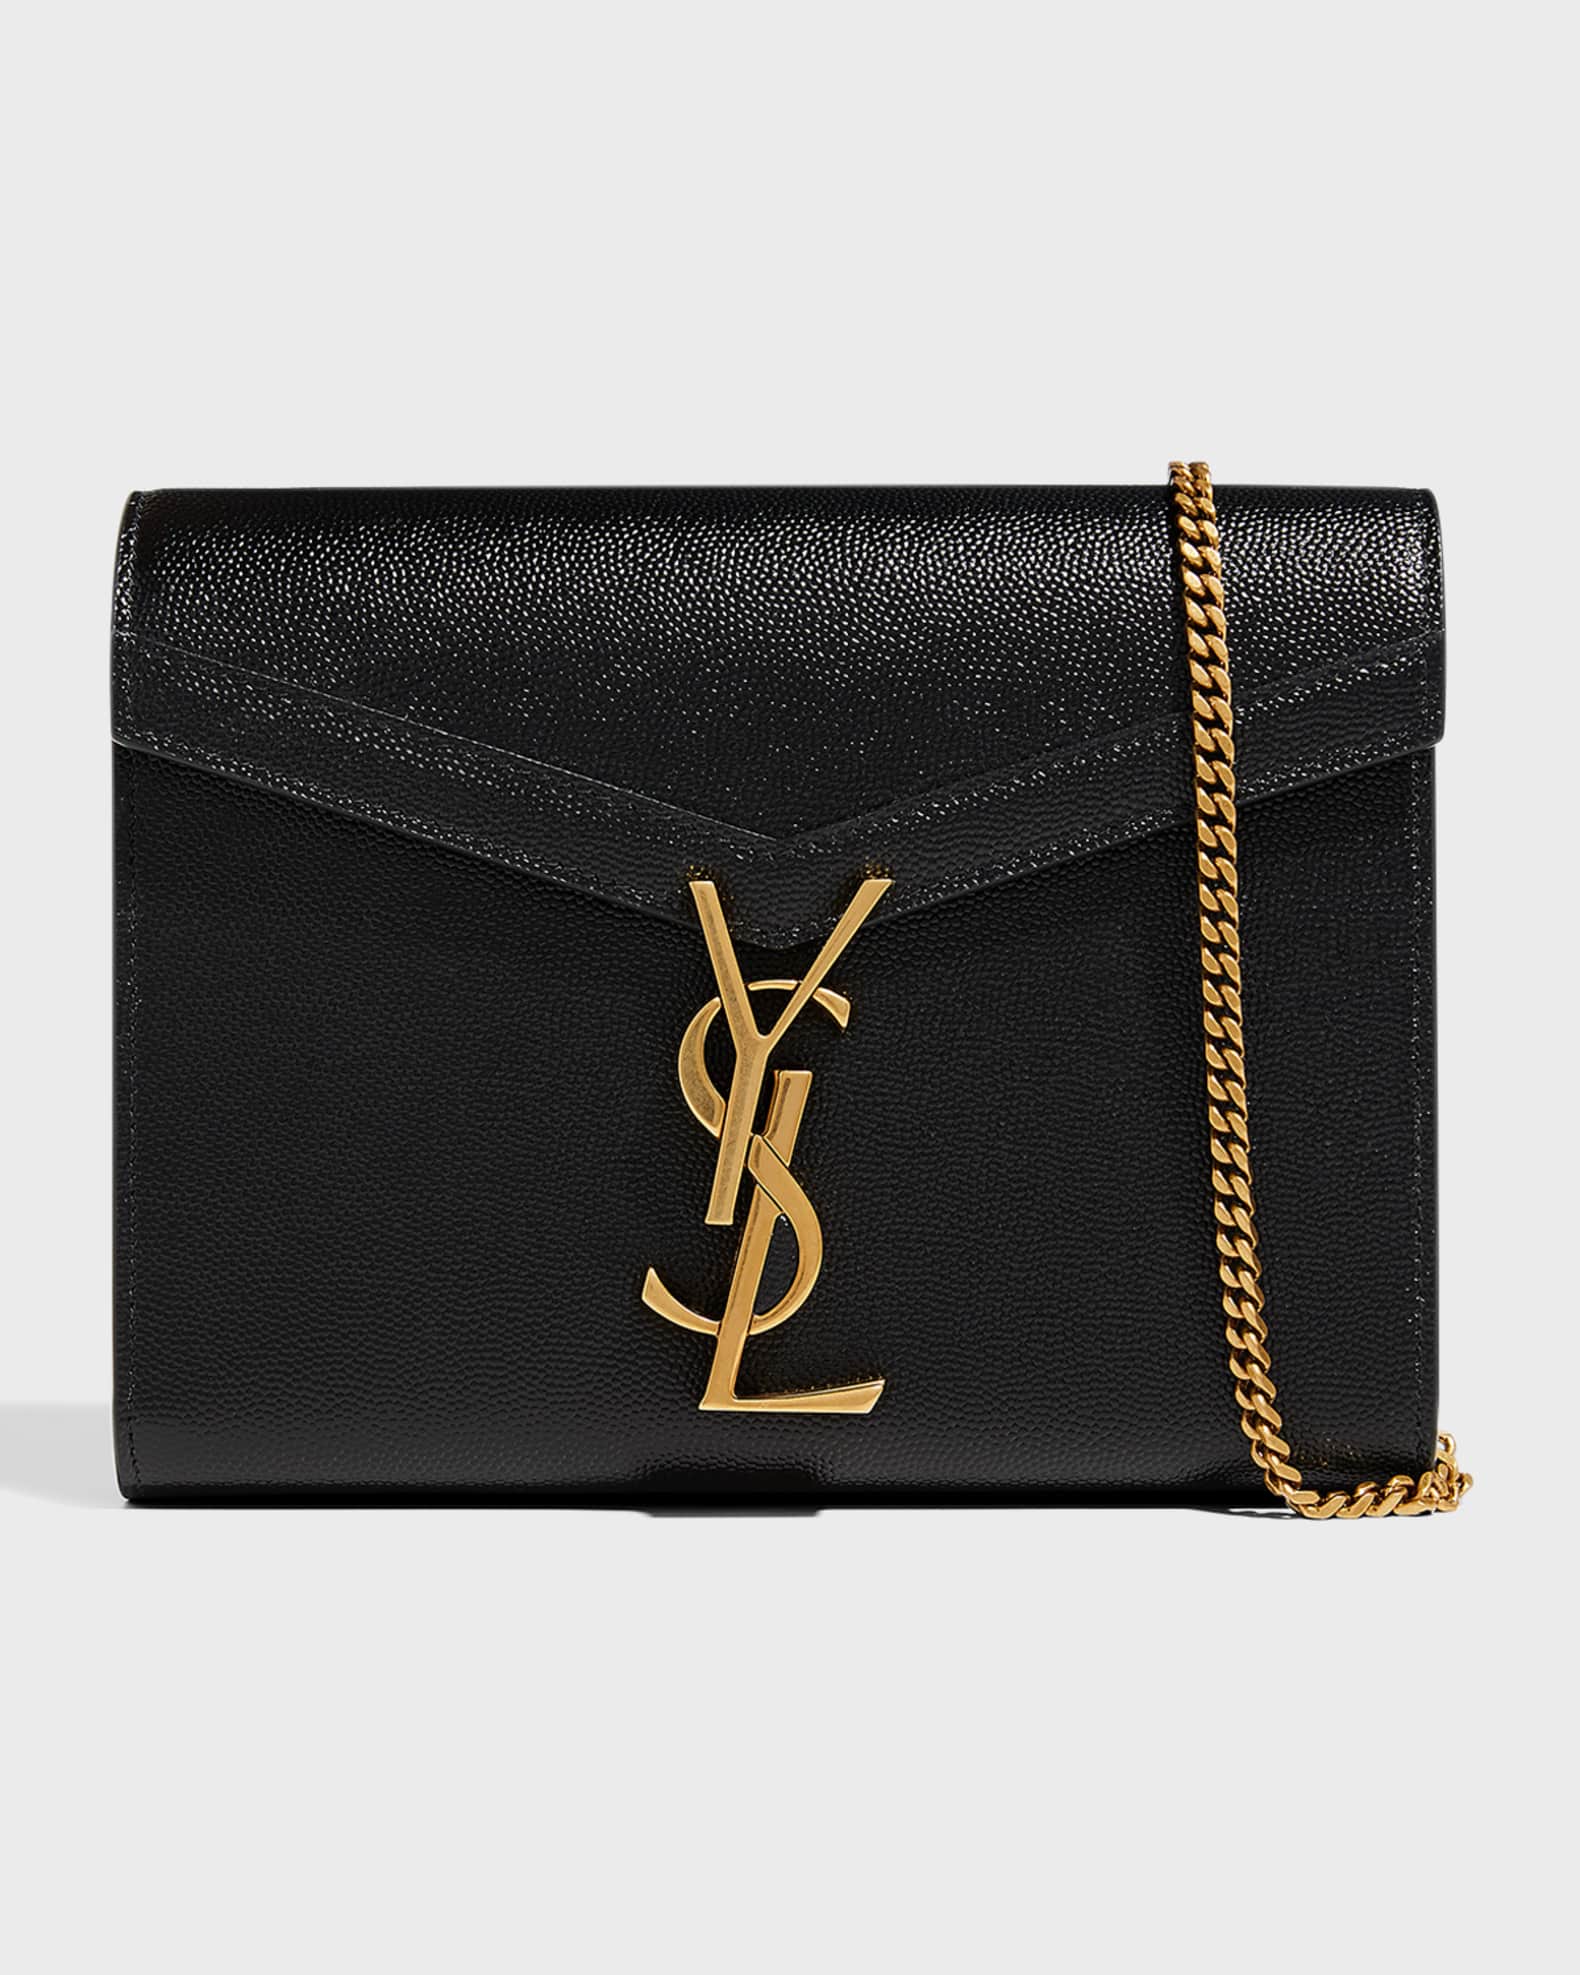 Saint Laurent Cassandra Envelope Chain Wallet Bag in Dark Beige